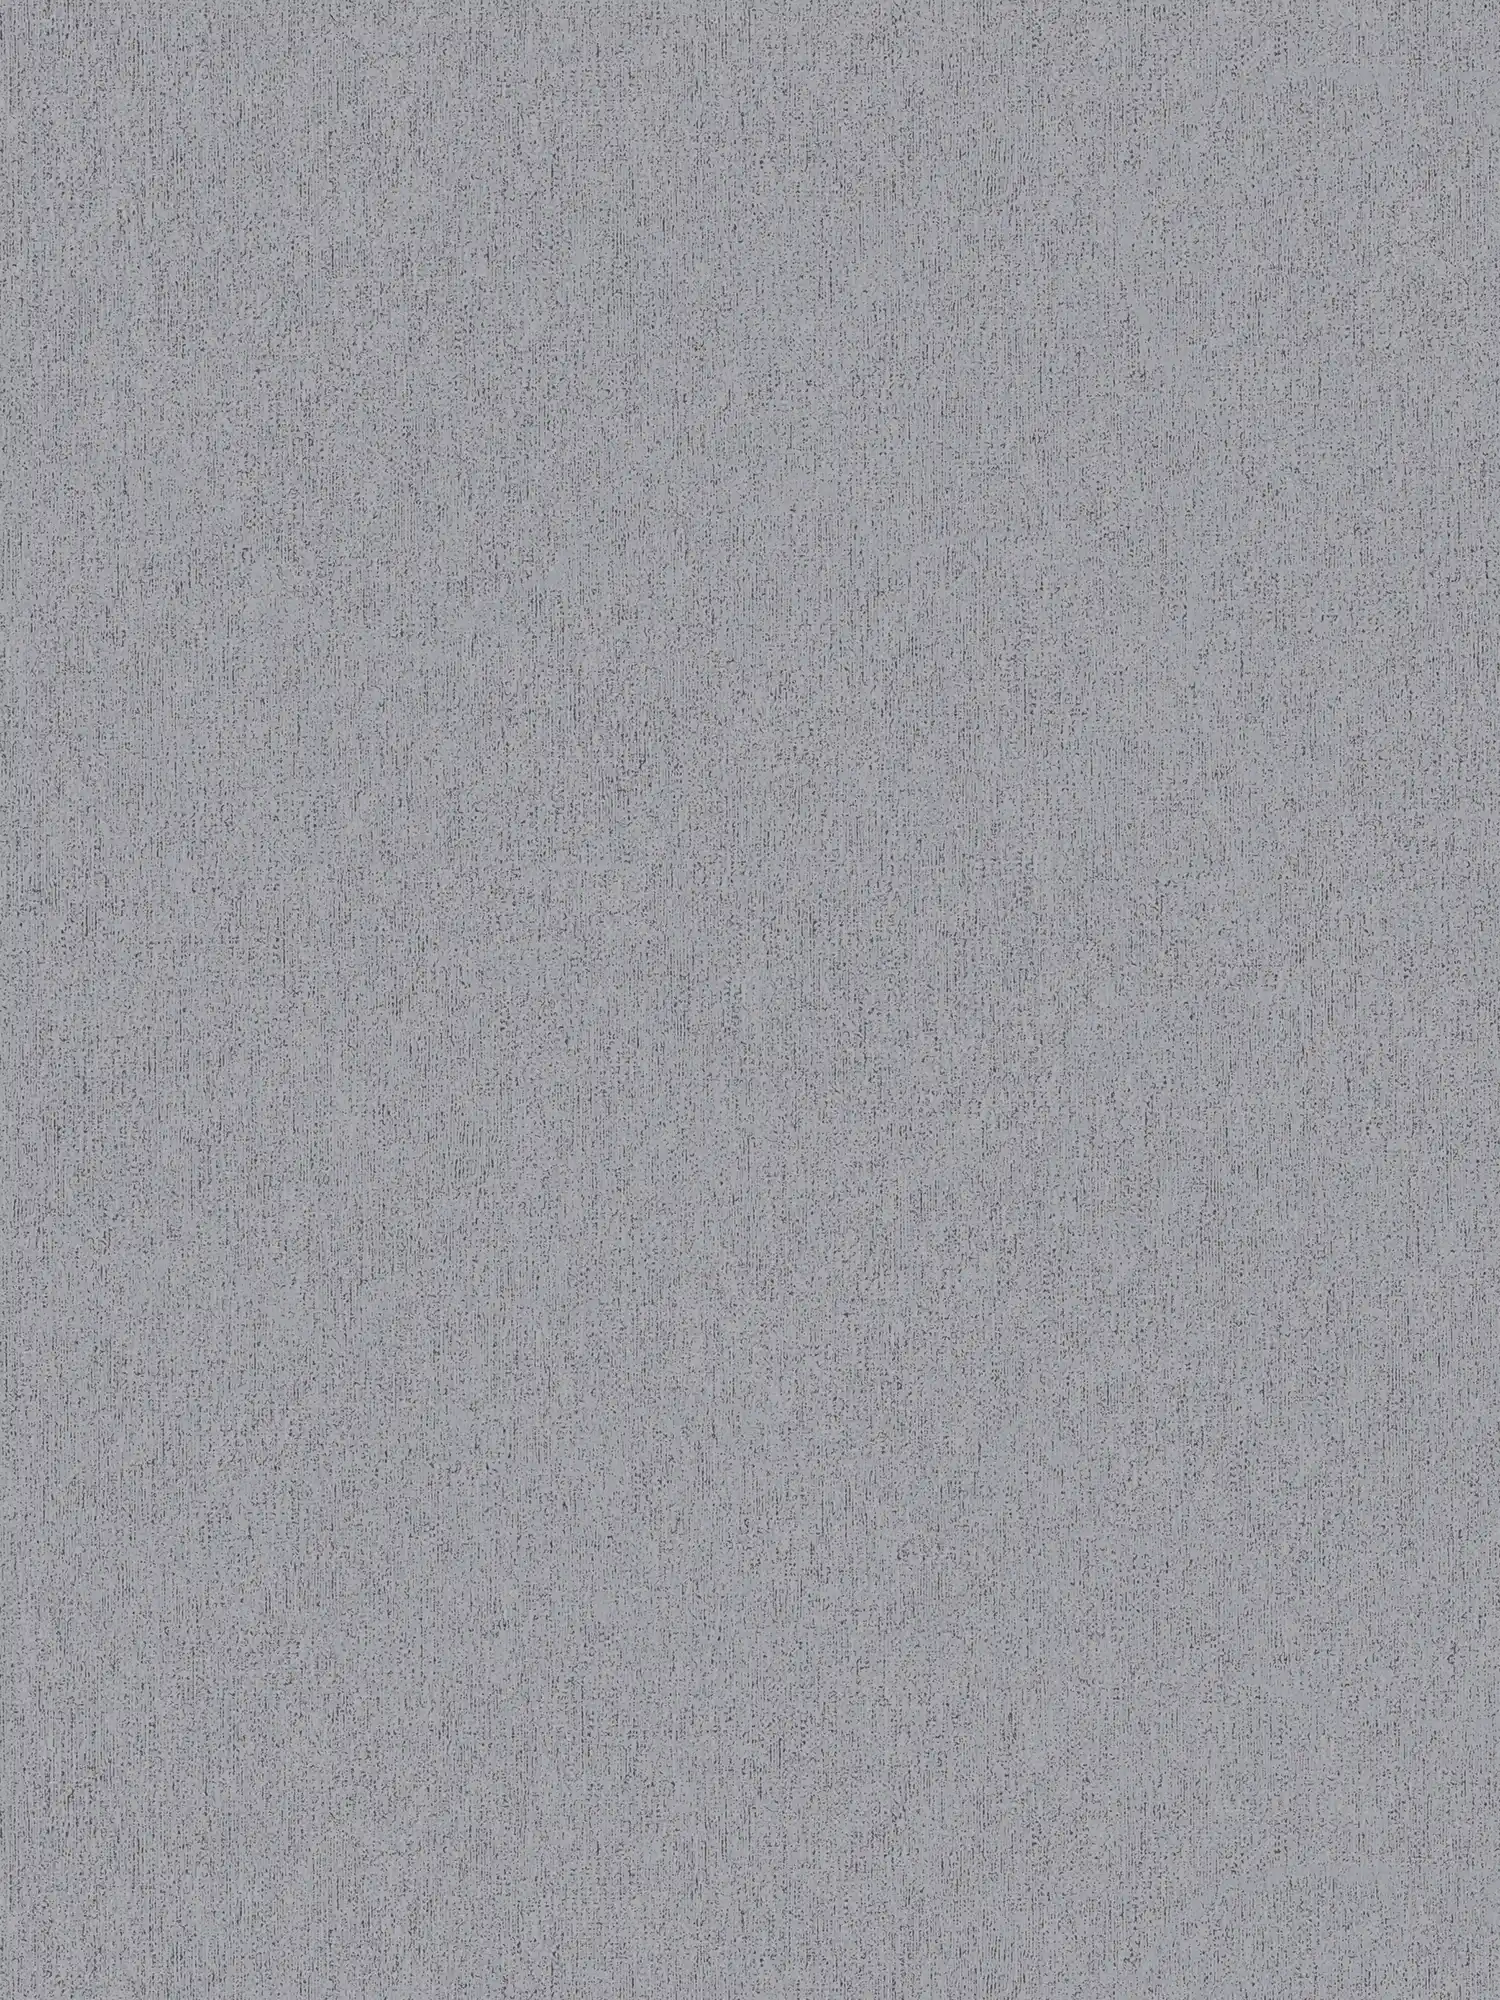 Smooth non-woven wallpaper in textured look - grey, dark grey
